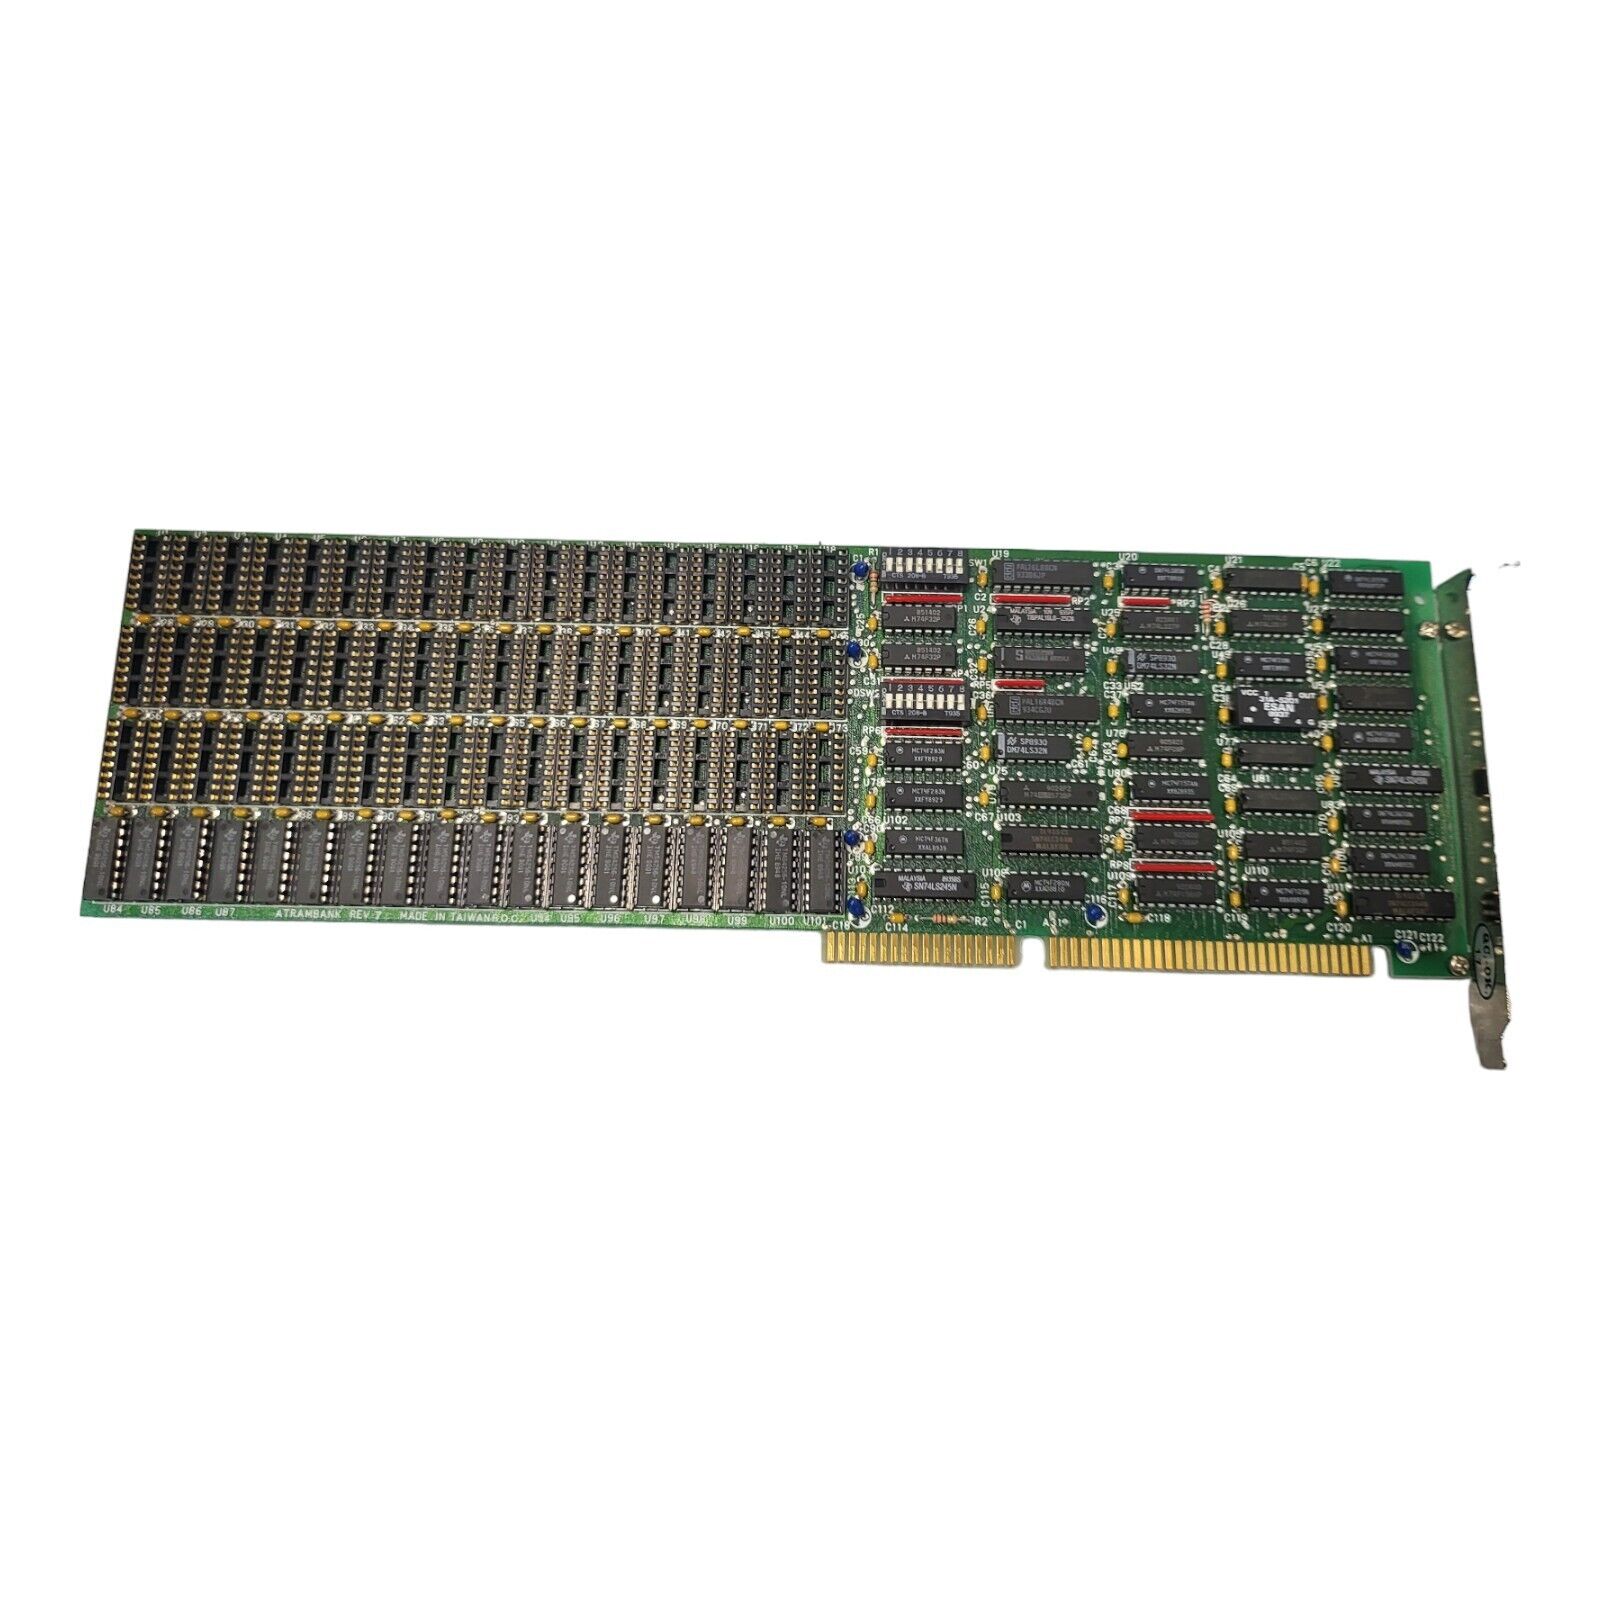 DFI ATRAMBANK Rev 7 ISA Ram Expansion Card 2Mb PC/XT/AT/Compaq/IBM - UNTESTED